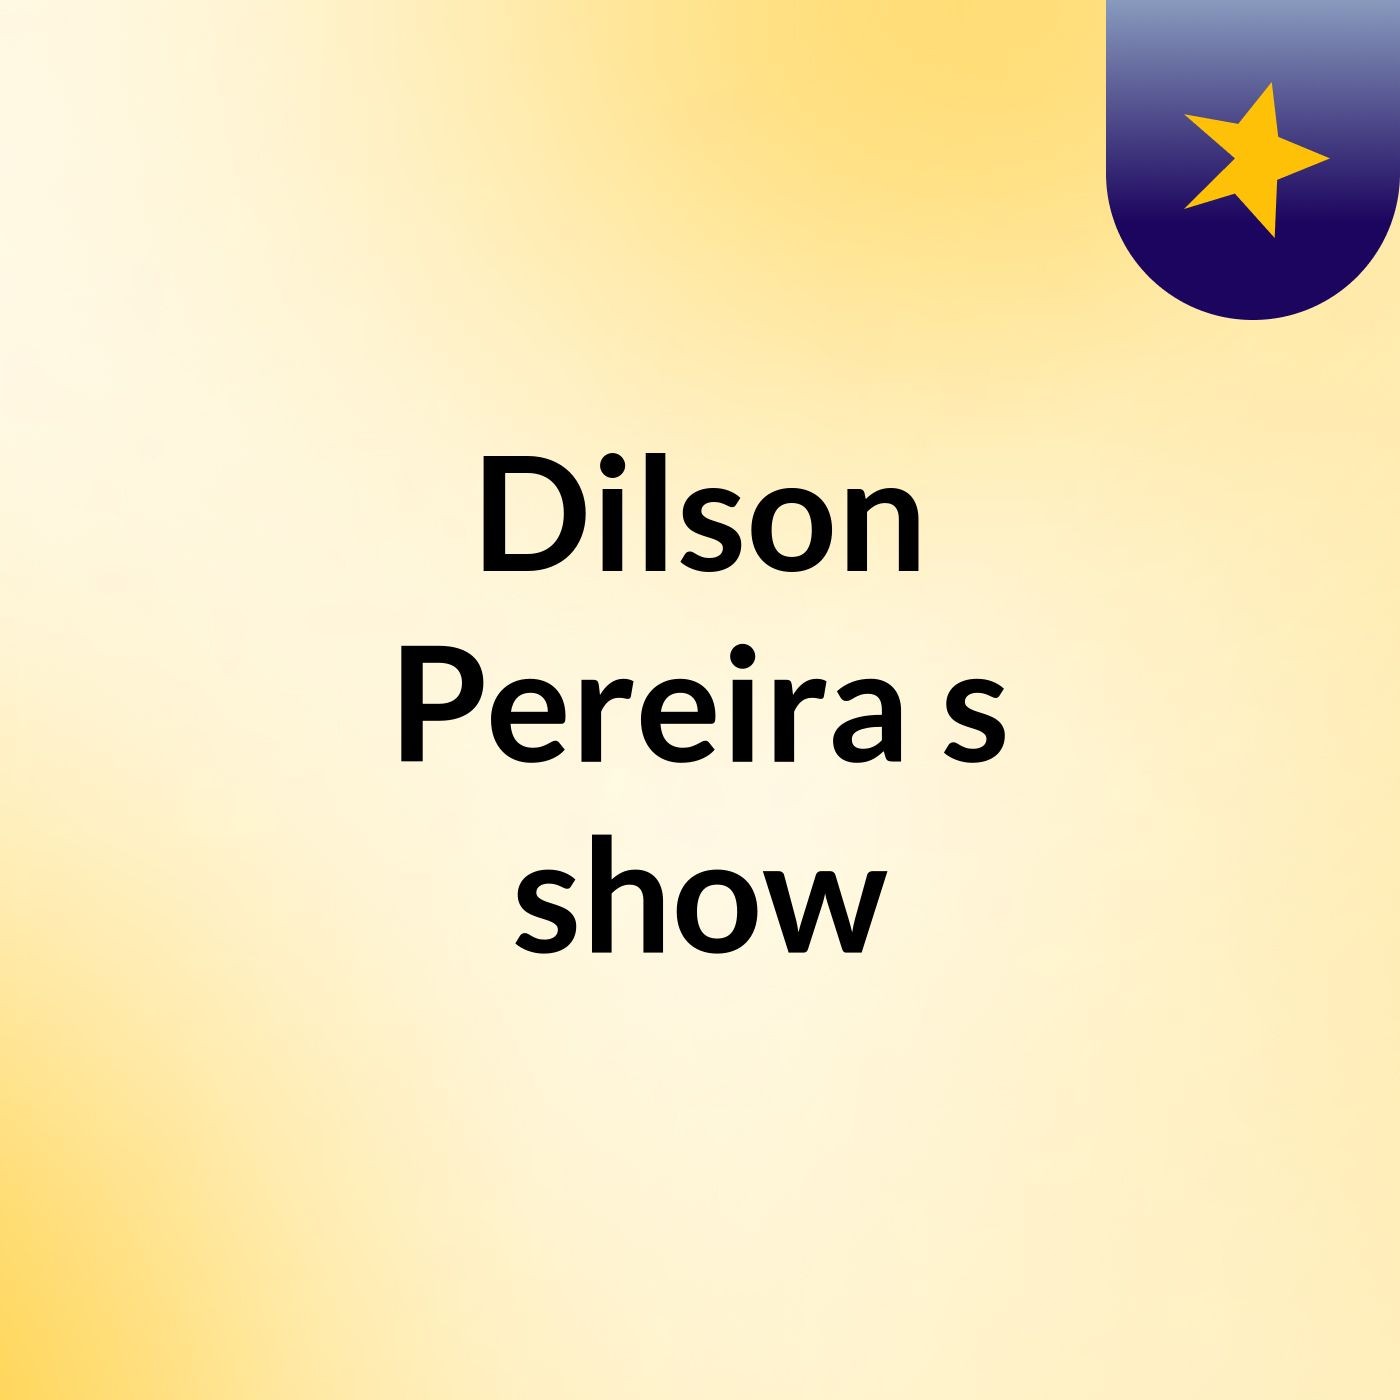 Dilson Pereira's show